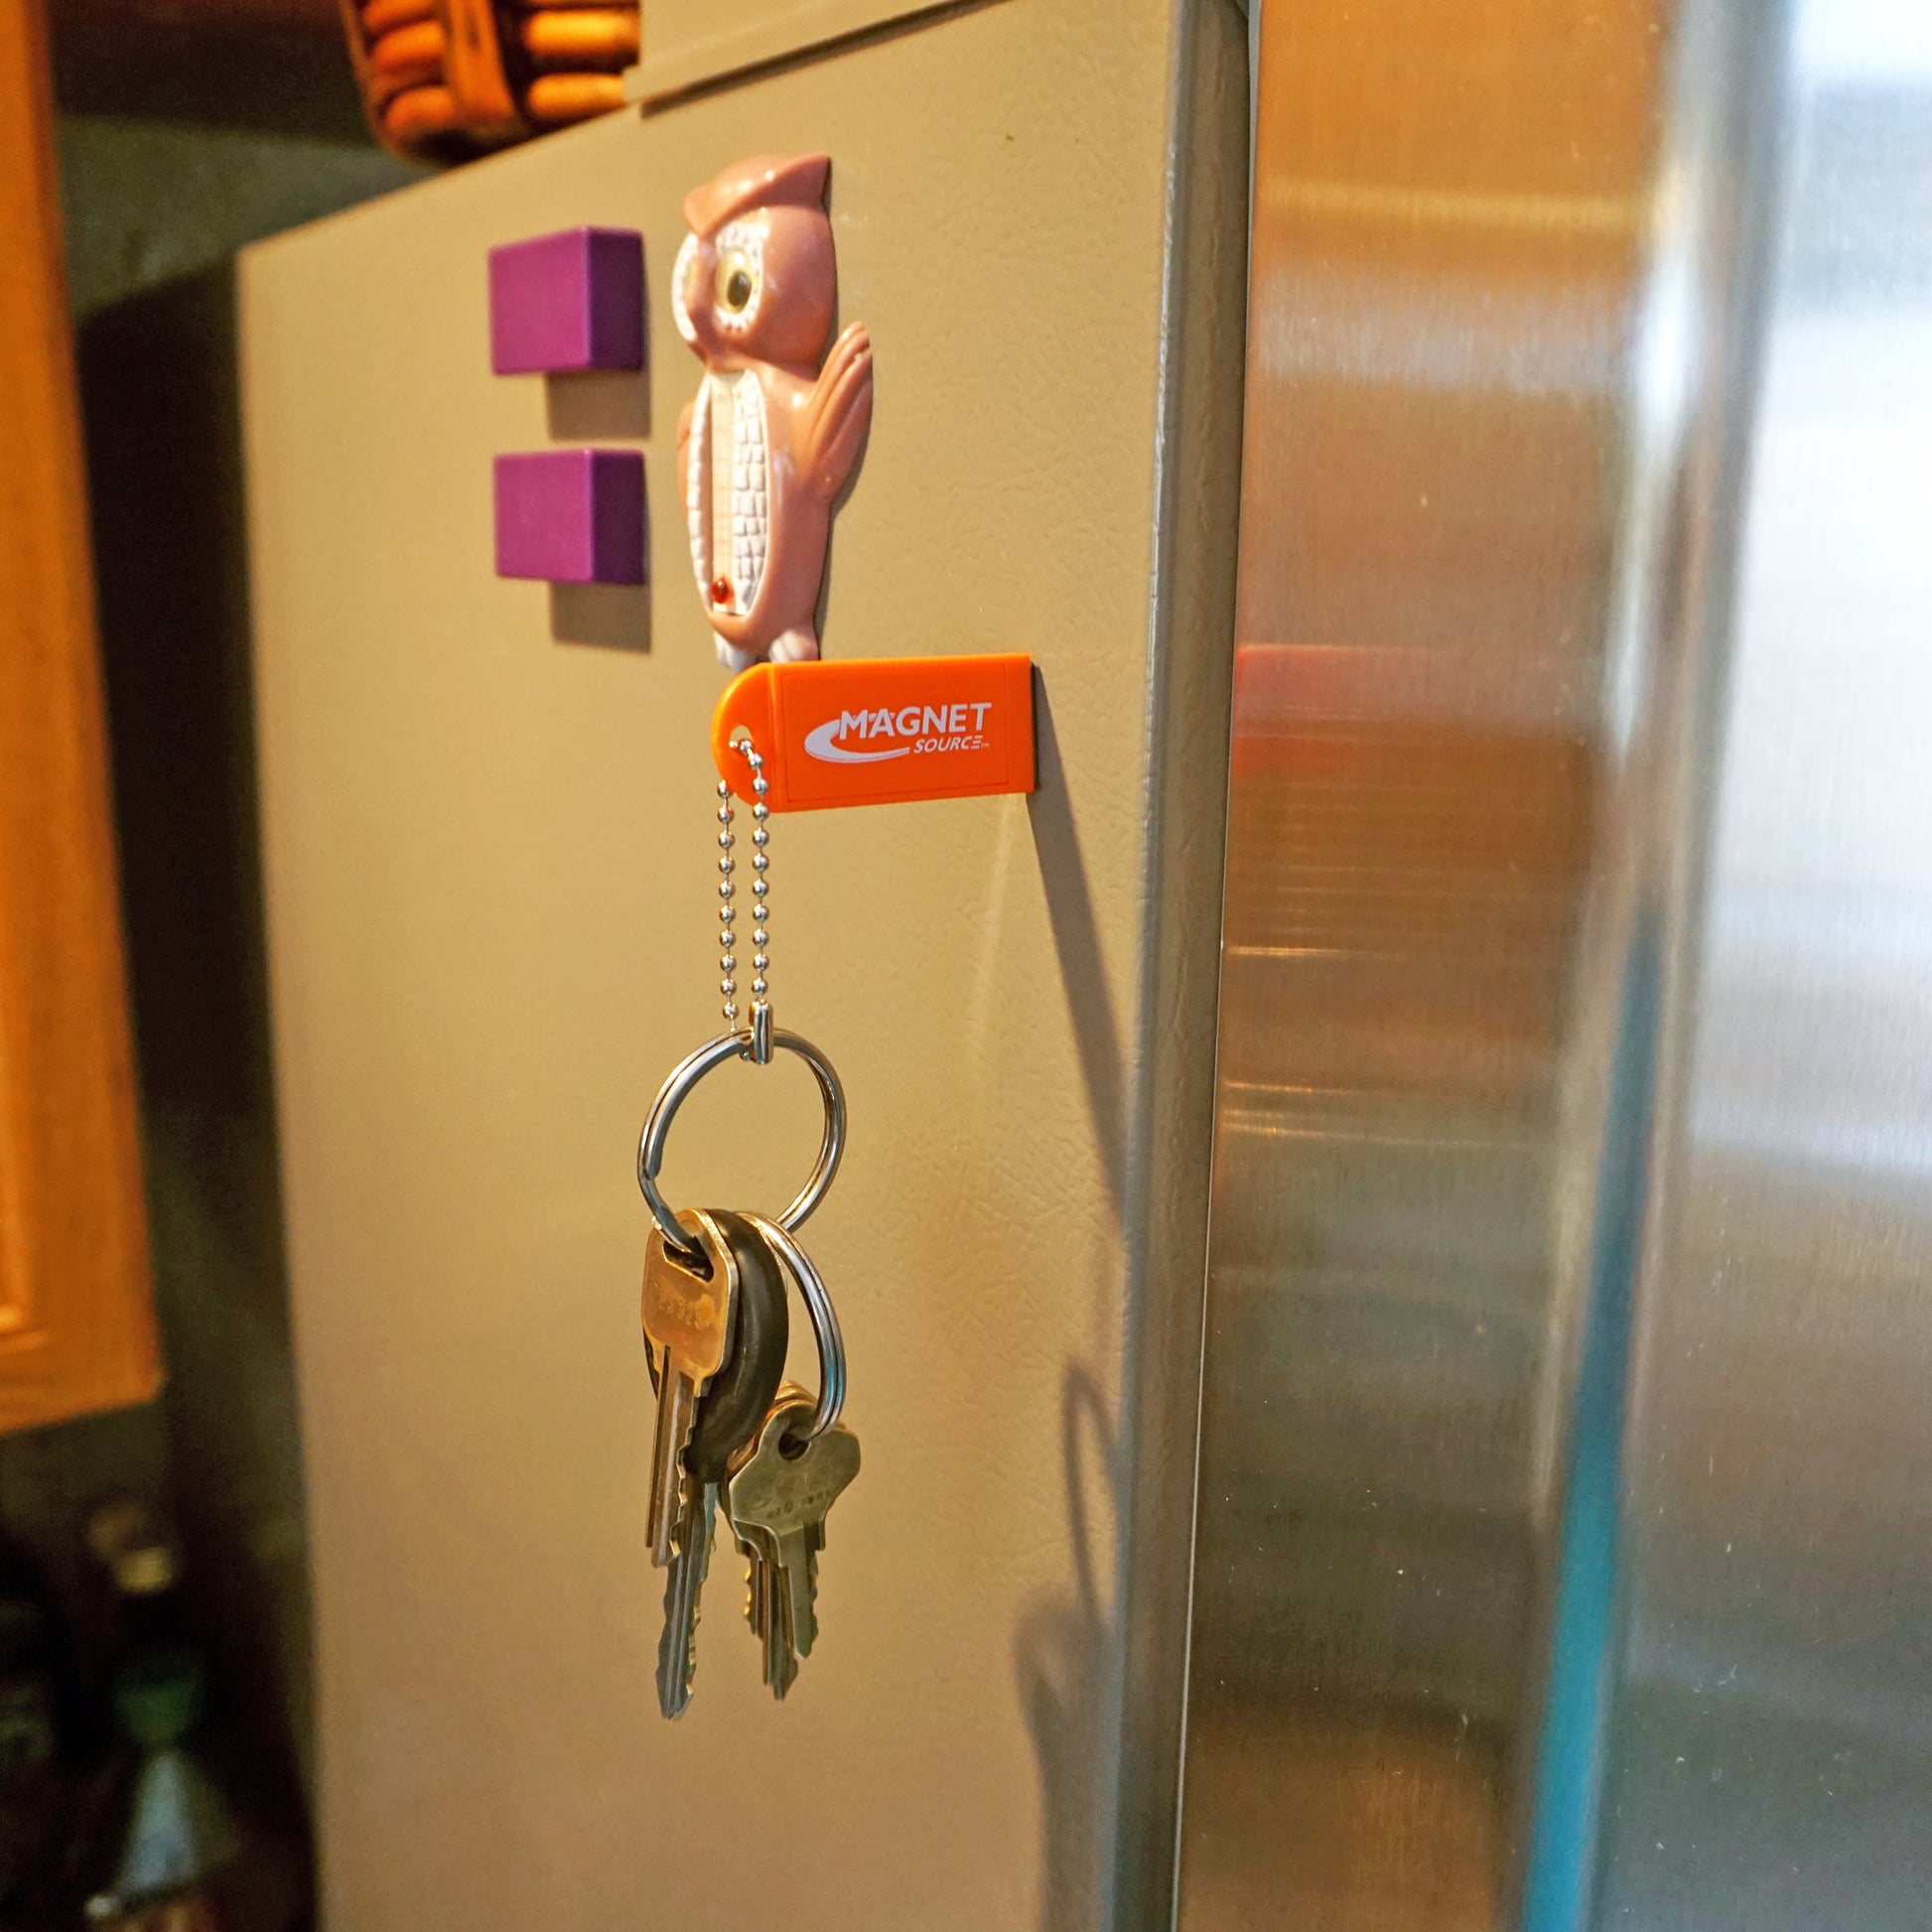 Load image into Gallery viewer, KCMO-BULK Neodymium Key Chain Magnet with Logo, Orange - Orange Magnet on Silver Refrigerator